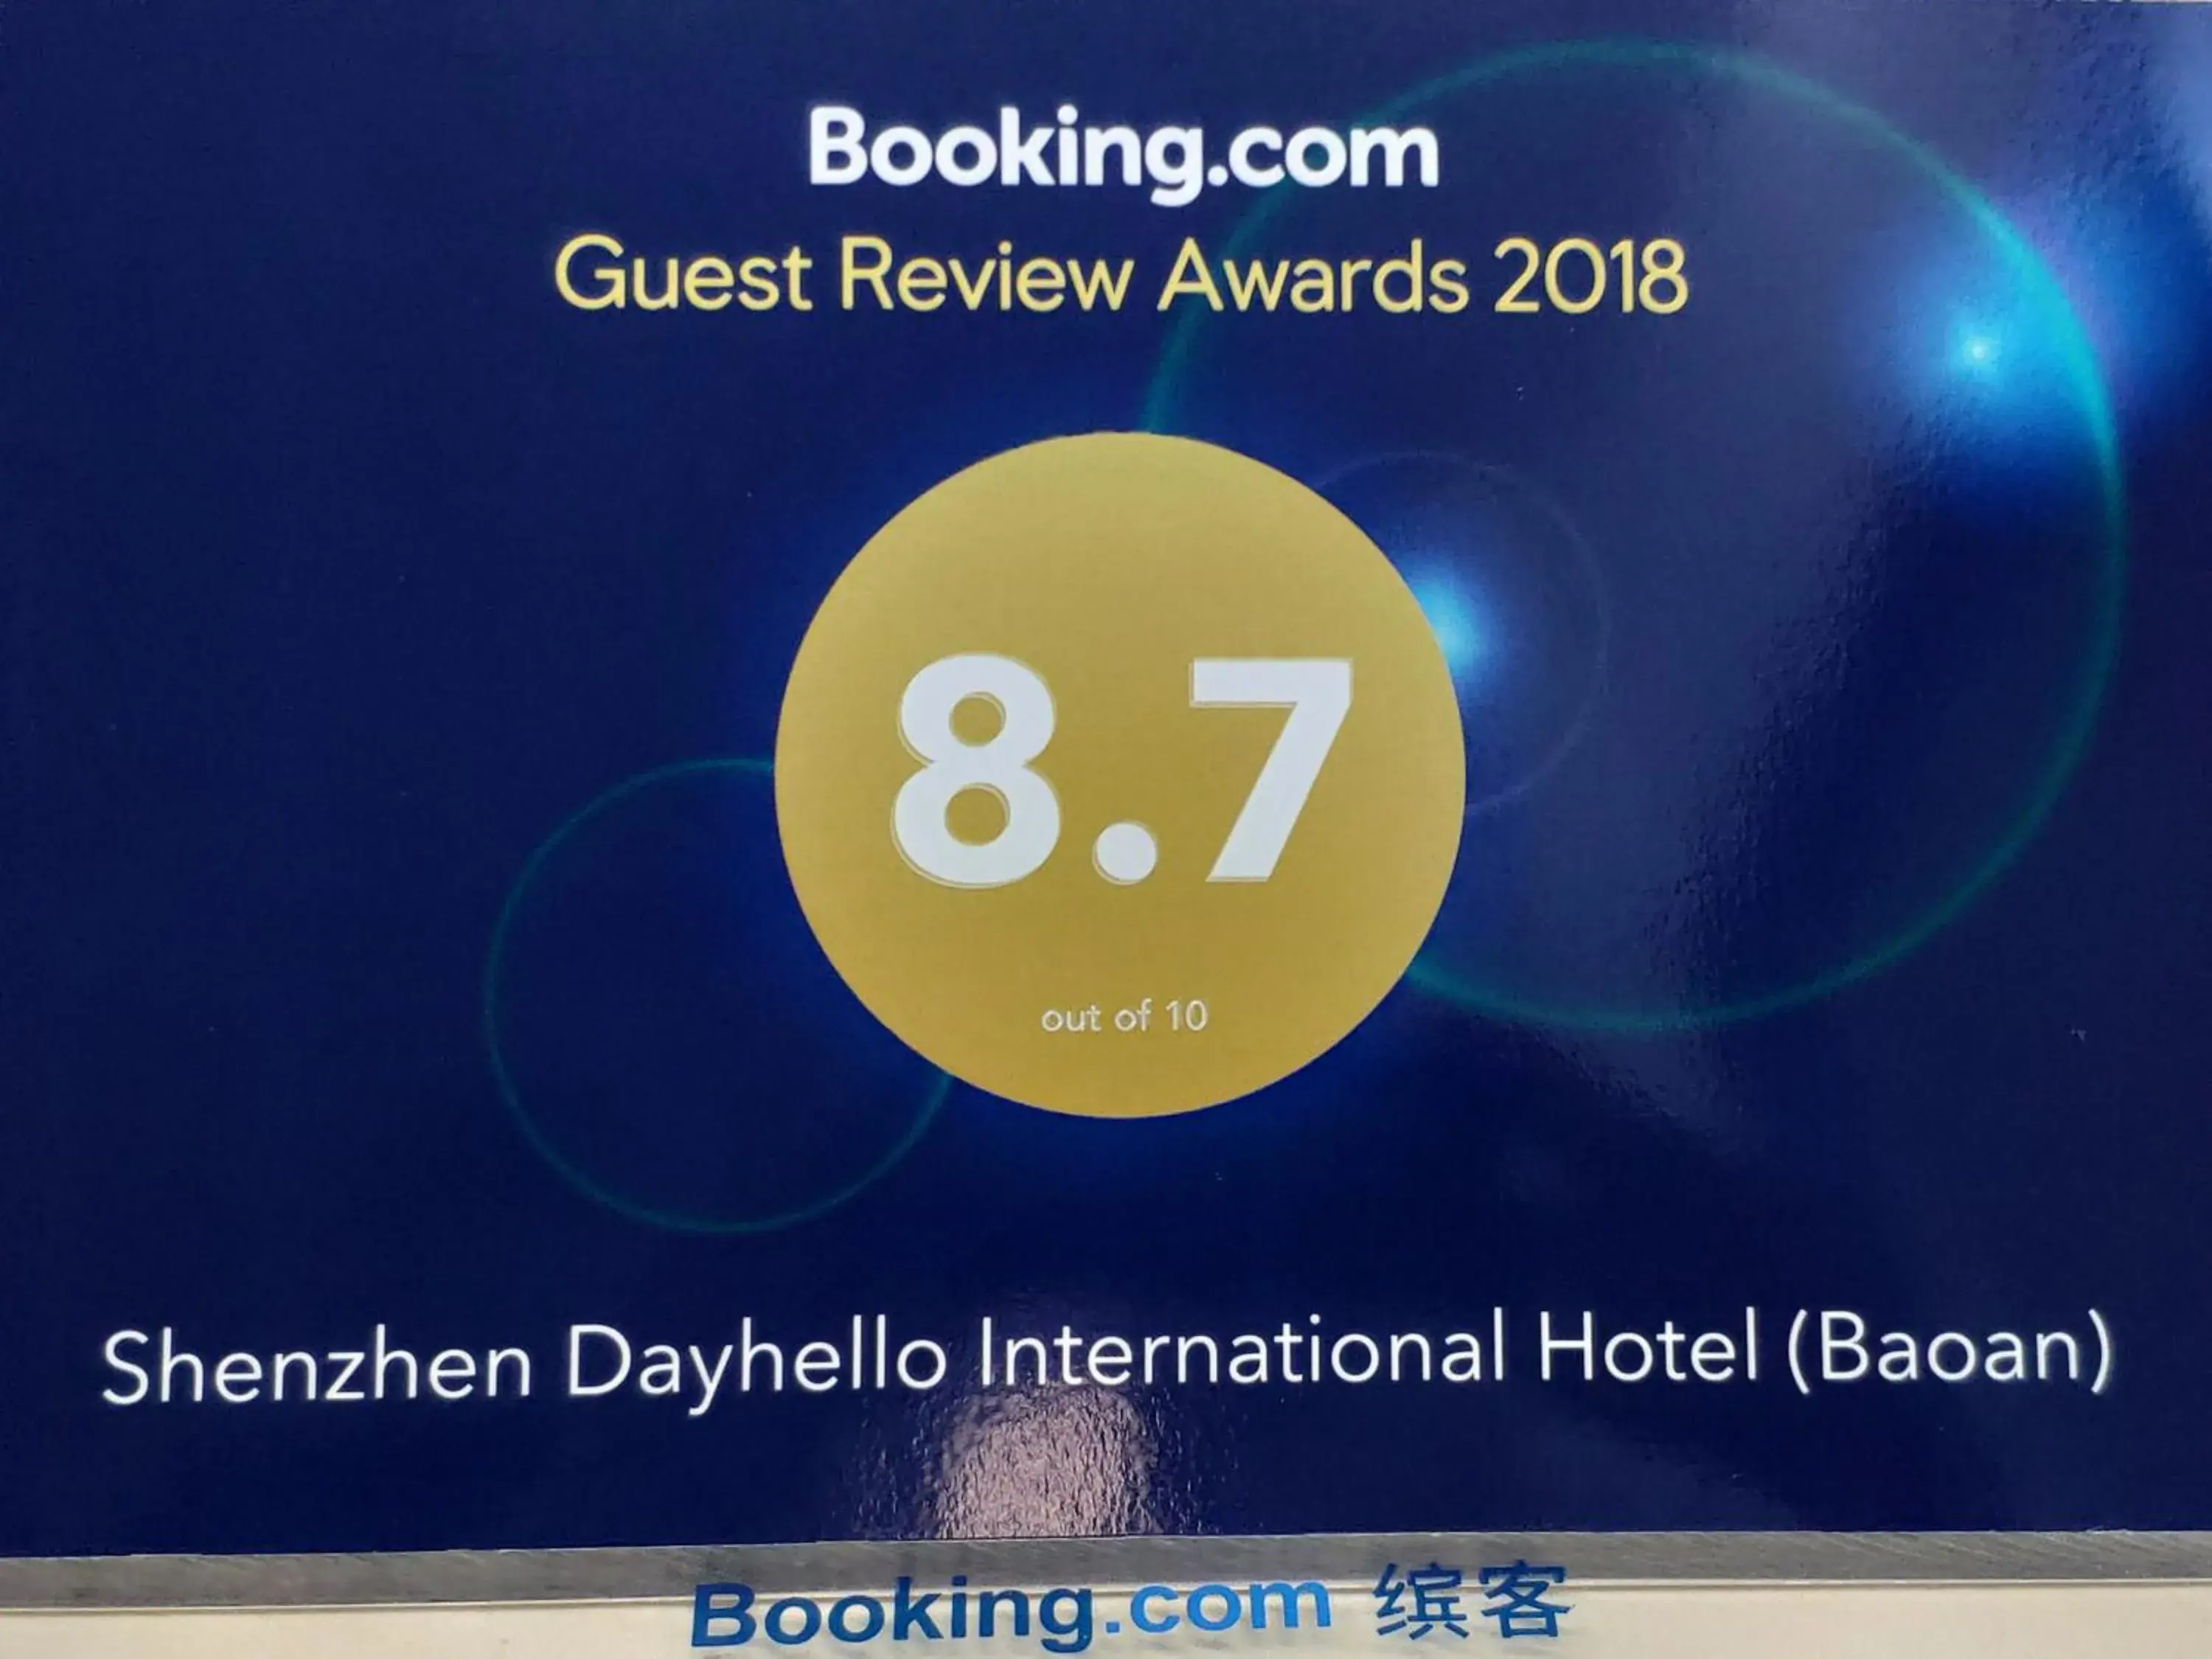 Certificate/Award in Shenzhen Dayhello international Hotel (Baoan)